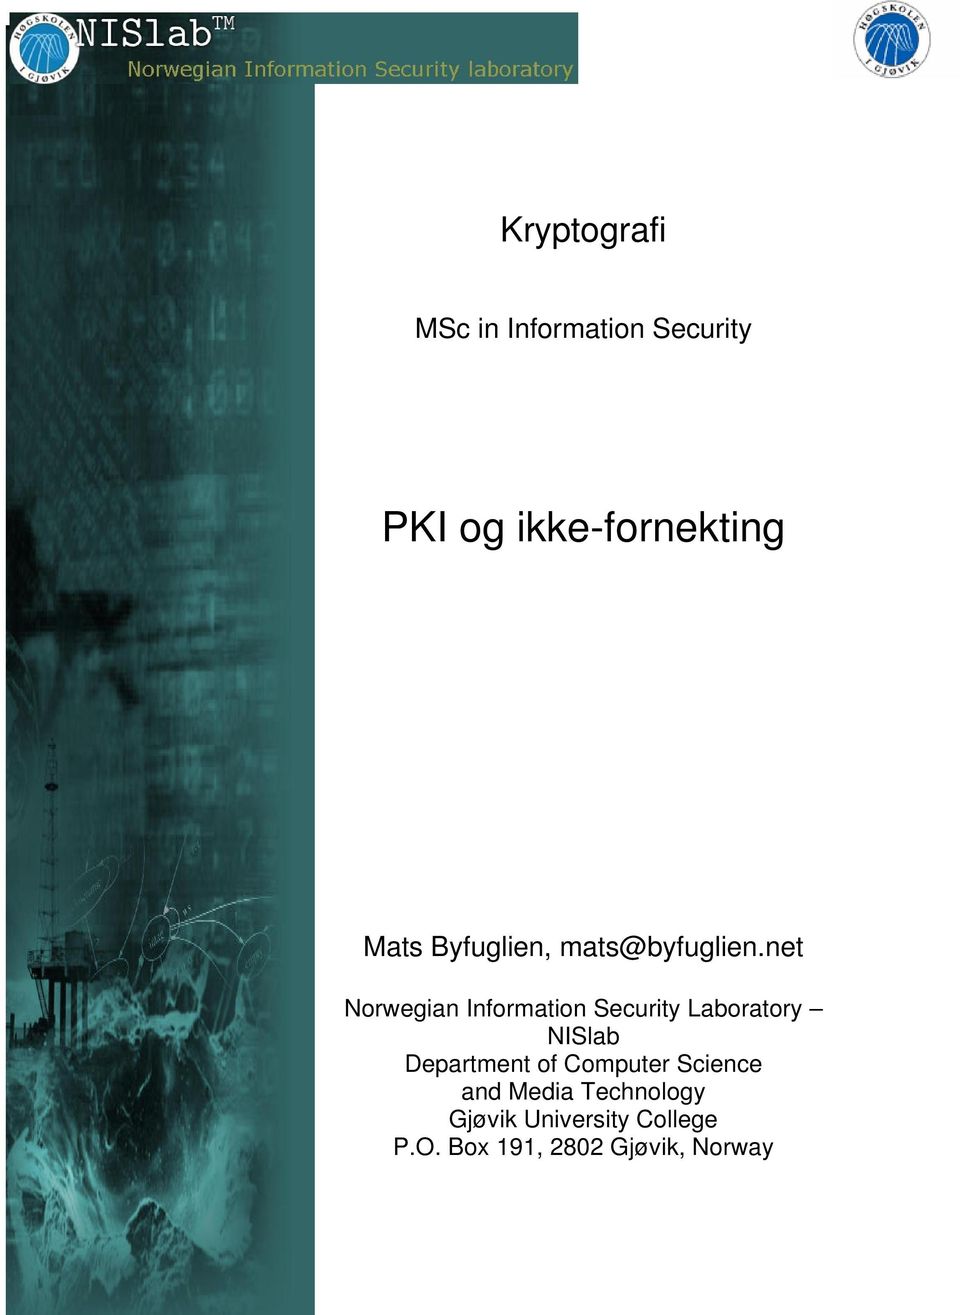 net Norwegian Information Security Laboratory NISlab Department